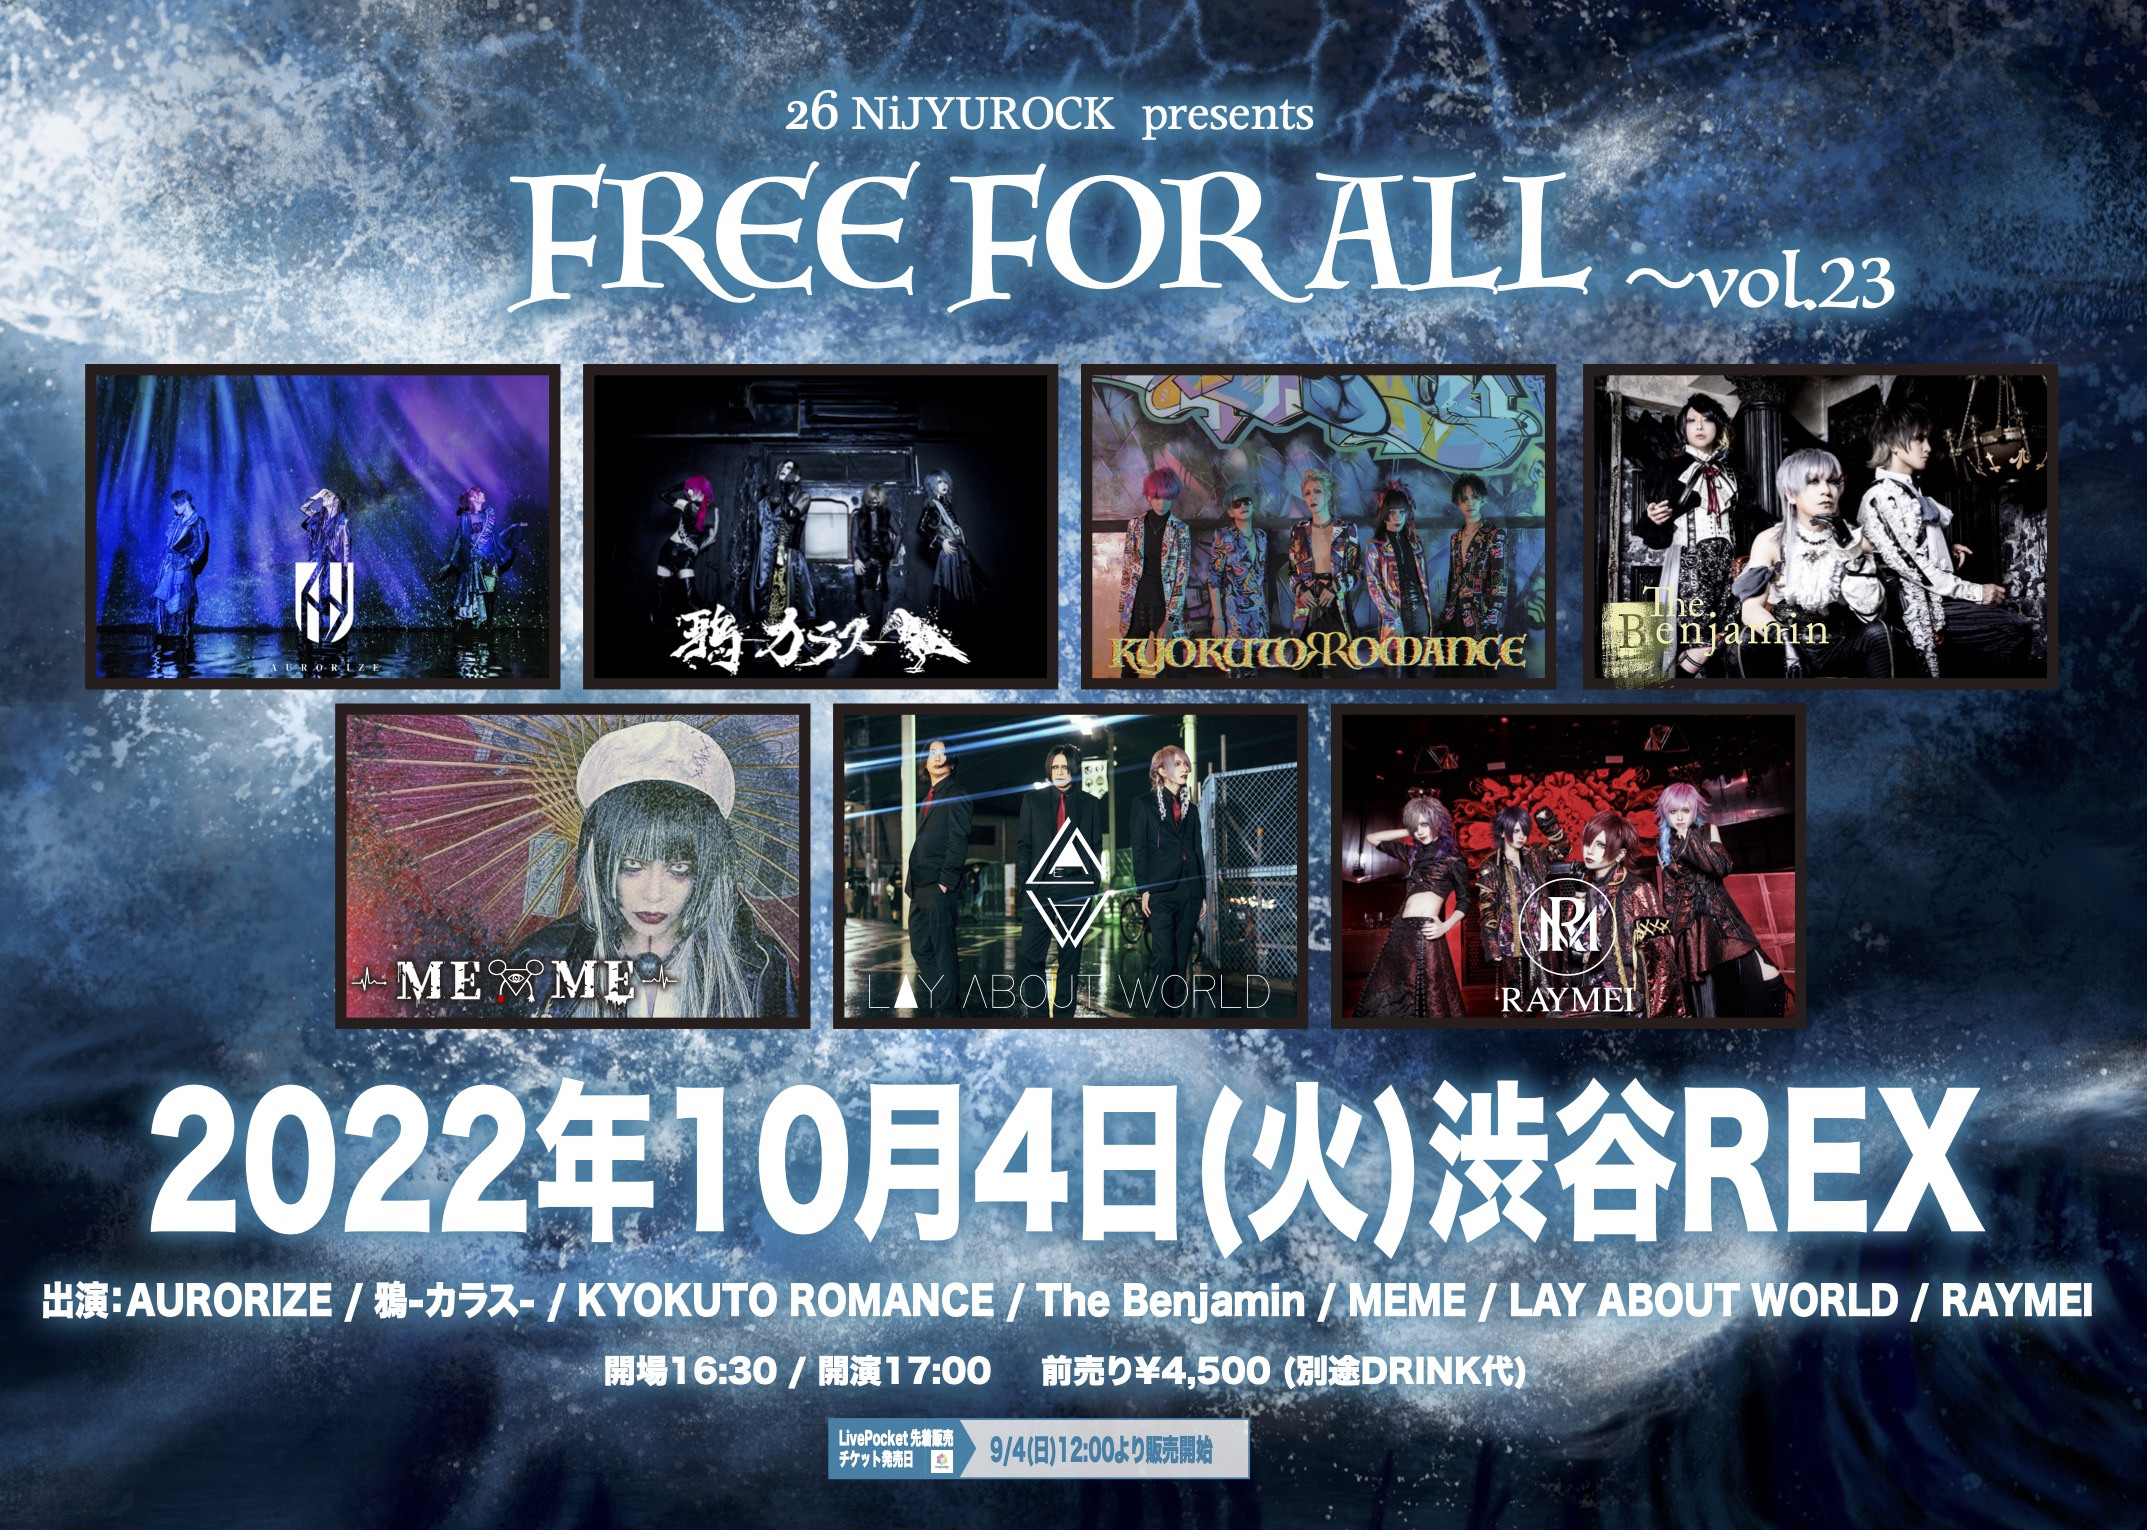 26 NiJYUROCK presents FREE FOR ALL〜vol.23